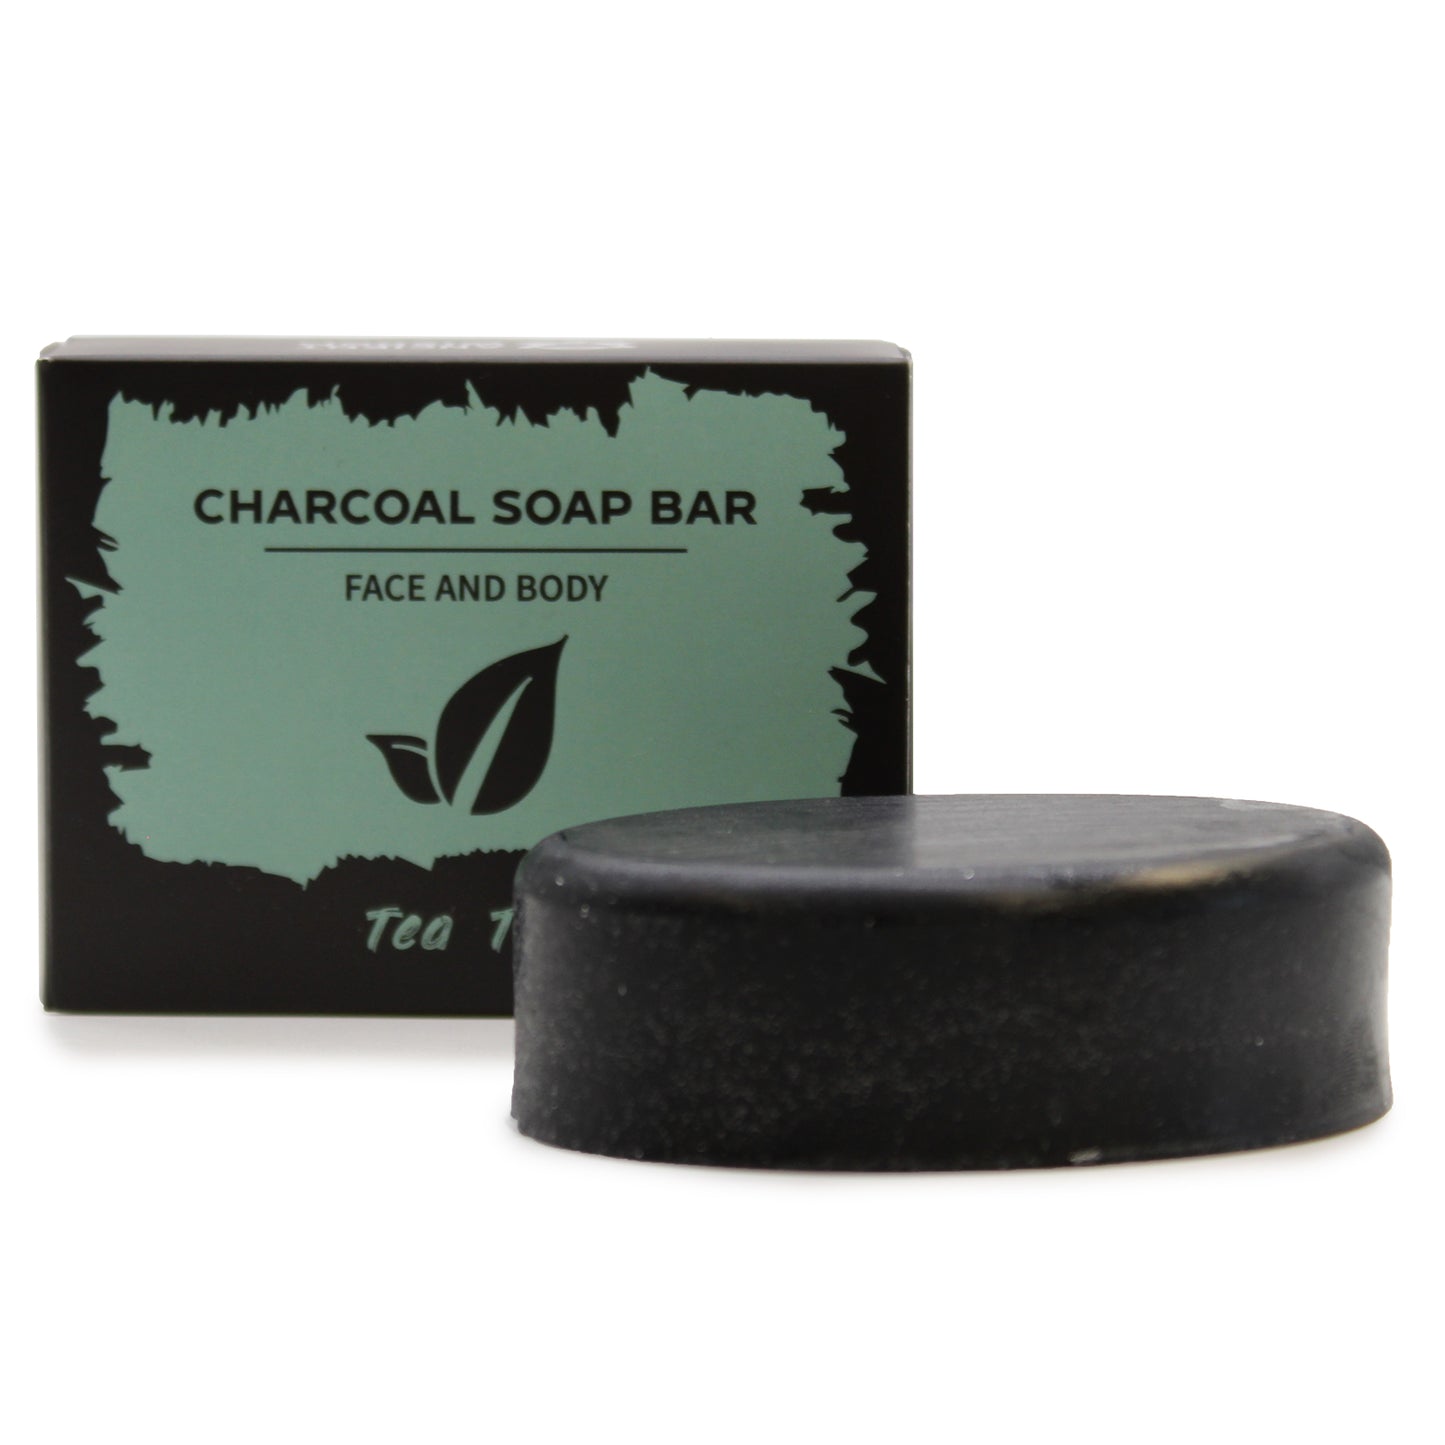 Tea Tree Charcoal Soap 85g